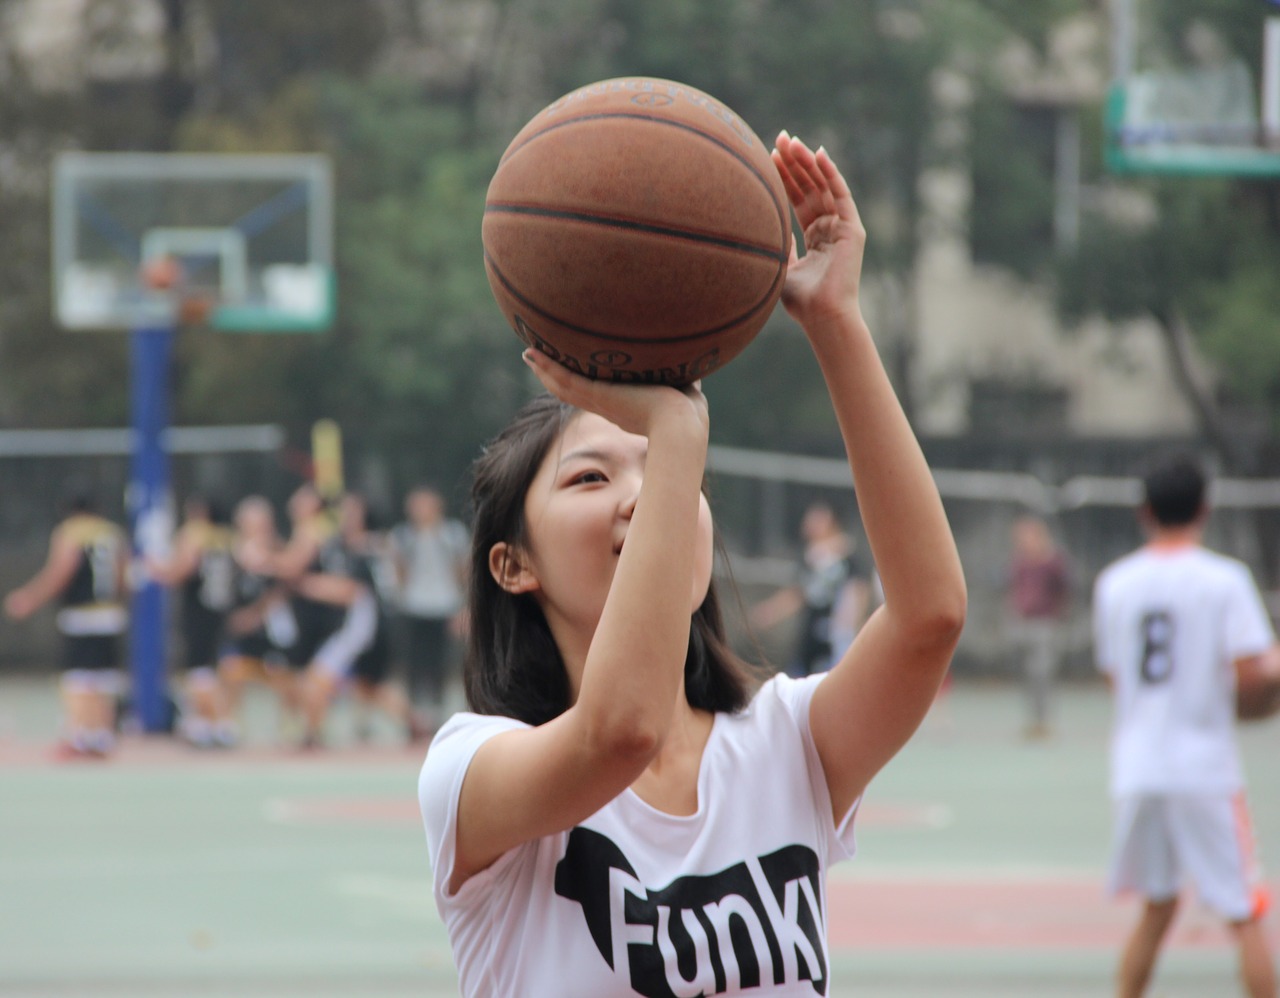 basketball girls shoot a basket free photo